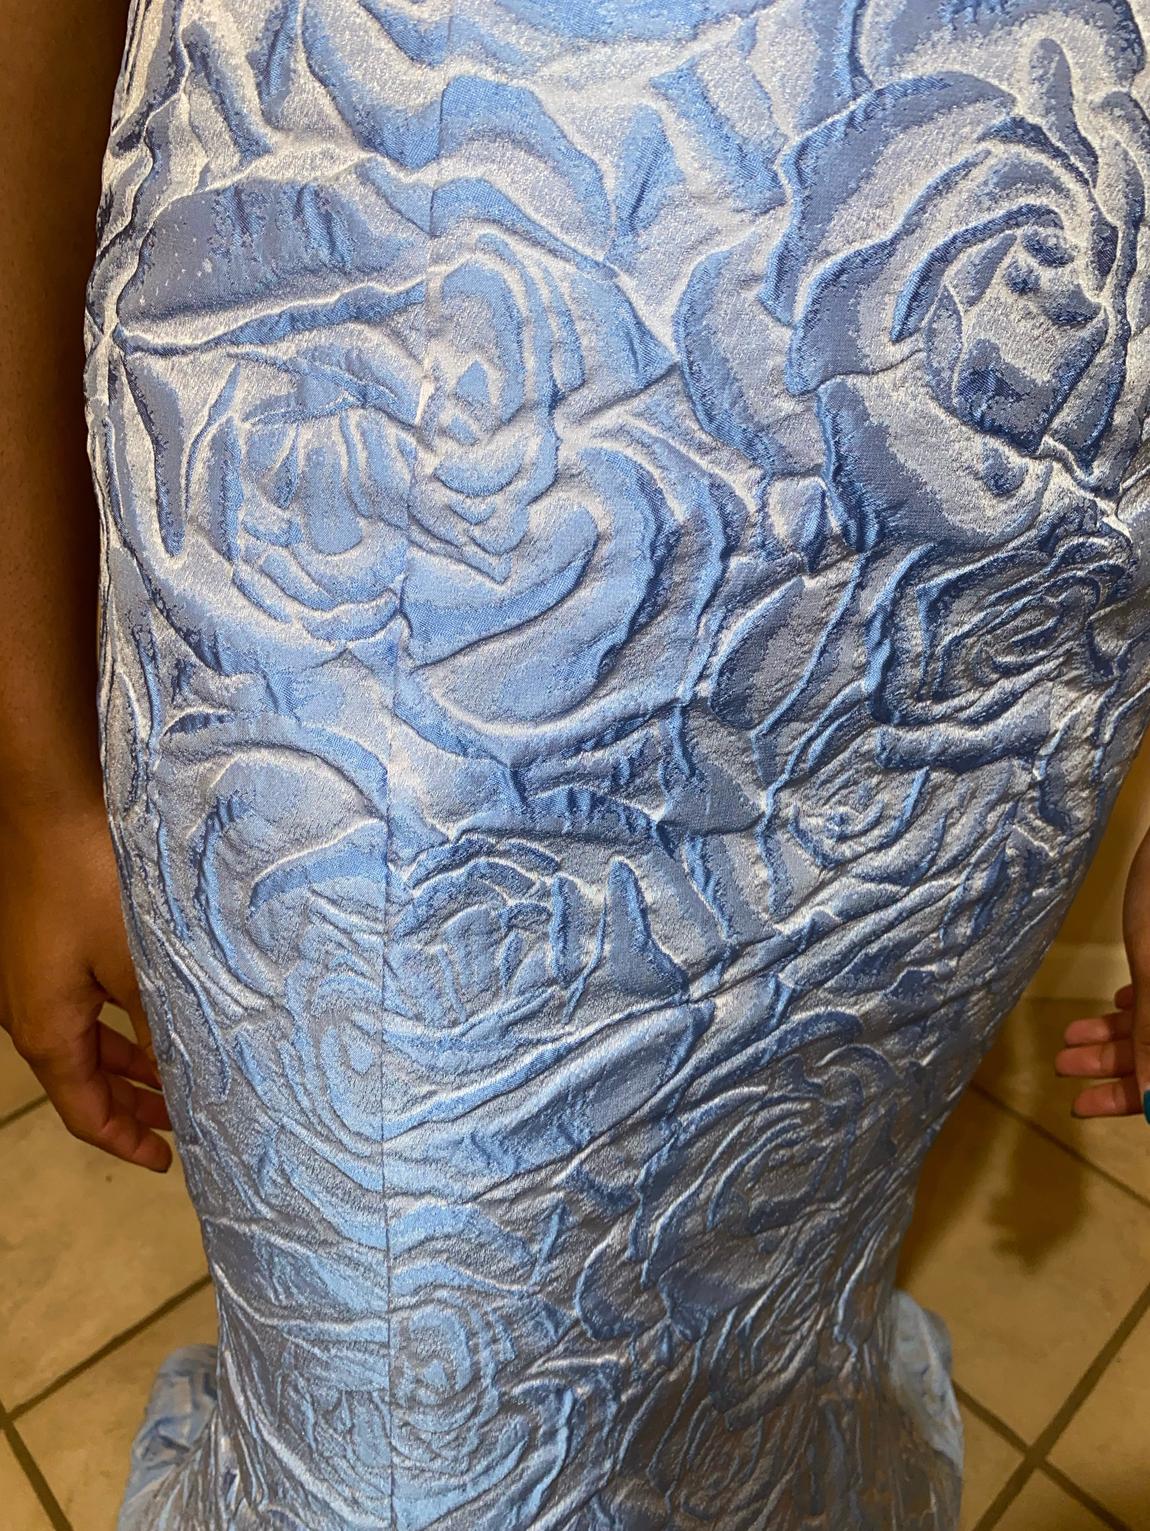 Ellie Wilde Size 2 Halter Lace Light Blue Mermaid Dress on Queenly